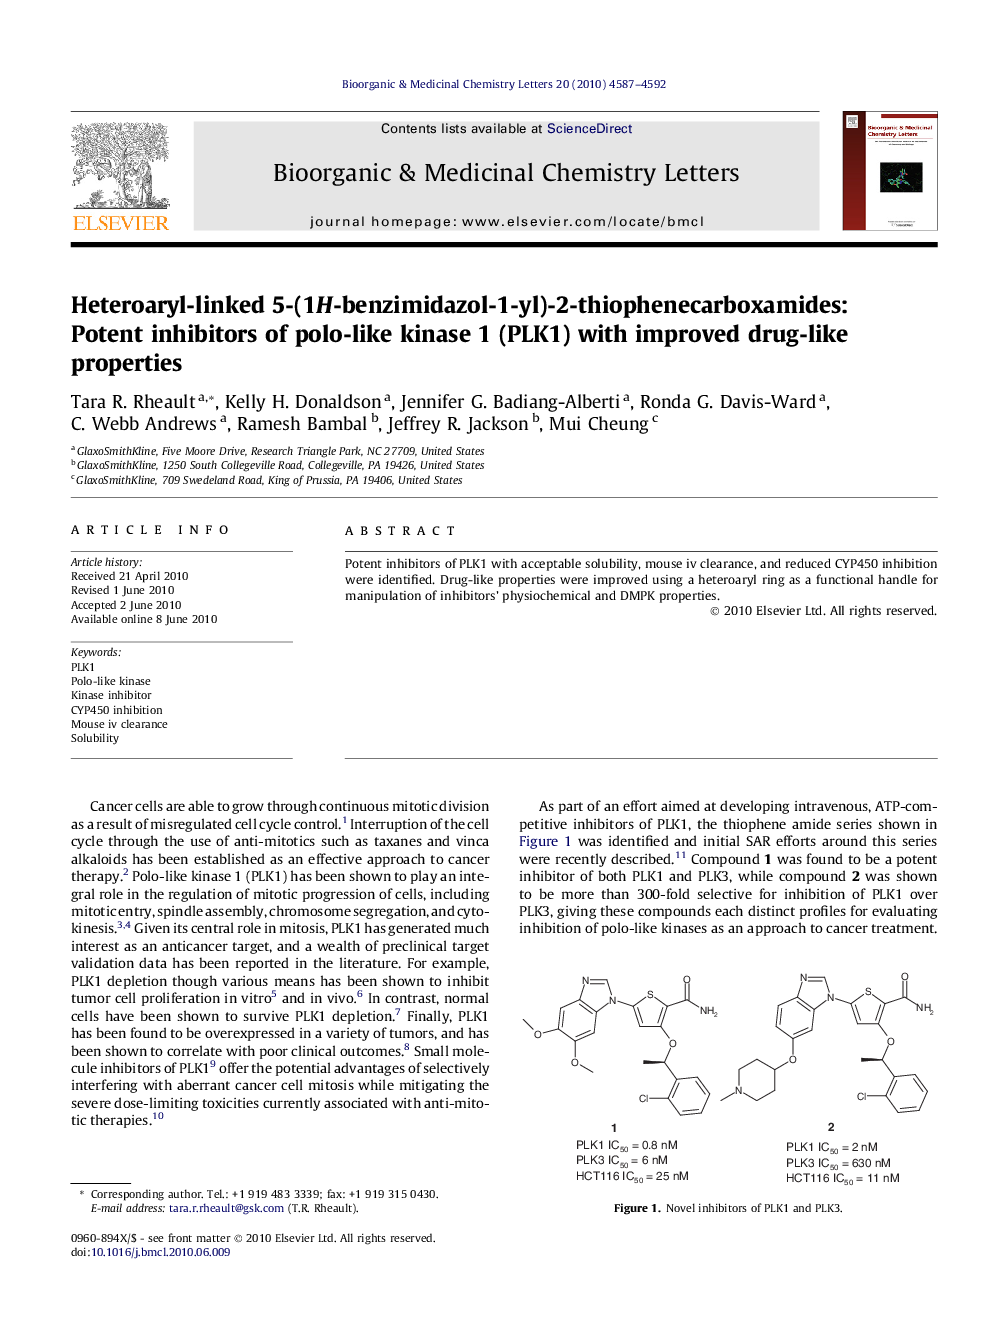 Heteroaryl-linked 5-(1H-benzimidazol-1-yl)-2-thiophenecarboxamides: Potent inhibitors of polo-like kinase 1 (PLK1) with improved drug-like properties